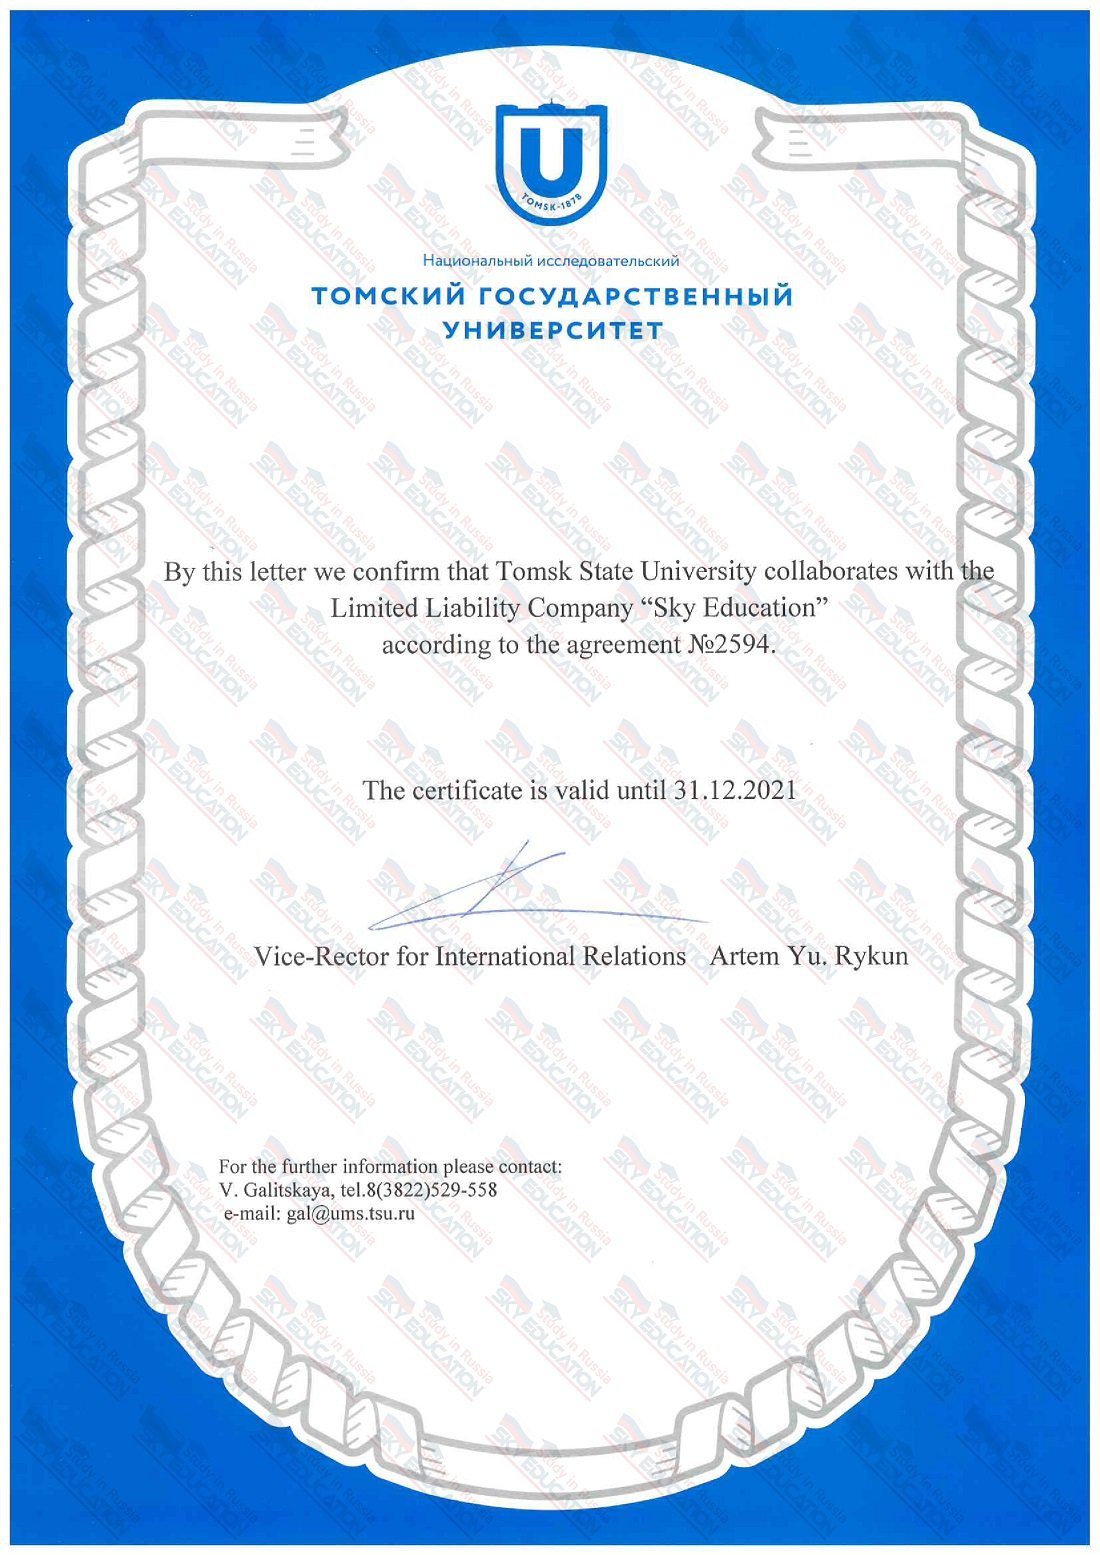 Sky EducationOfficial Representative Certificate of Tomsk State University